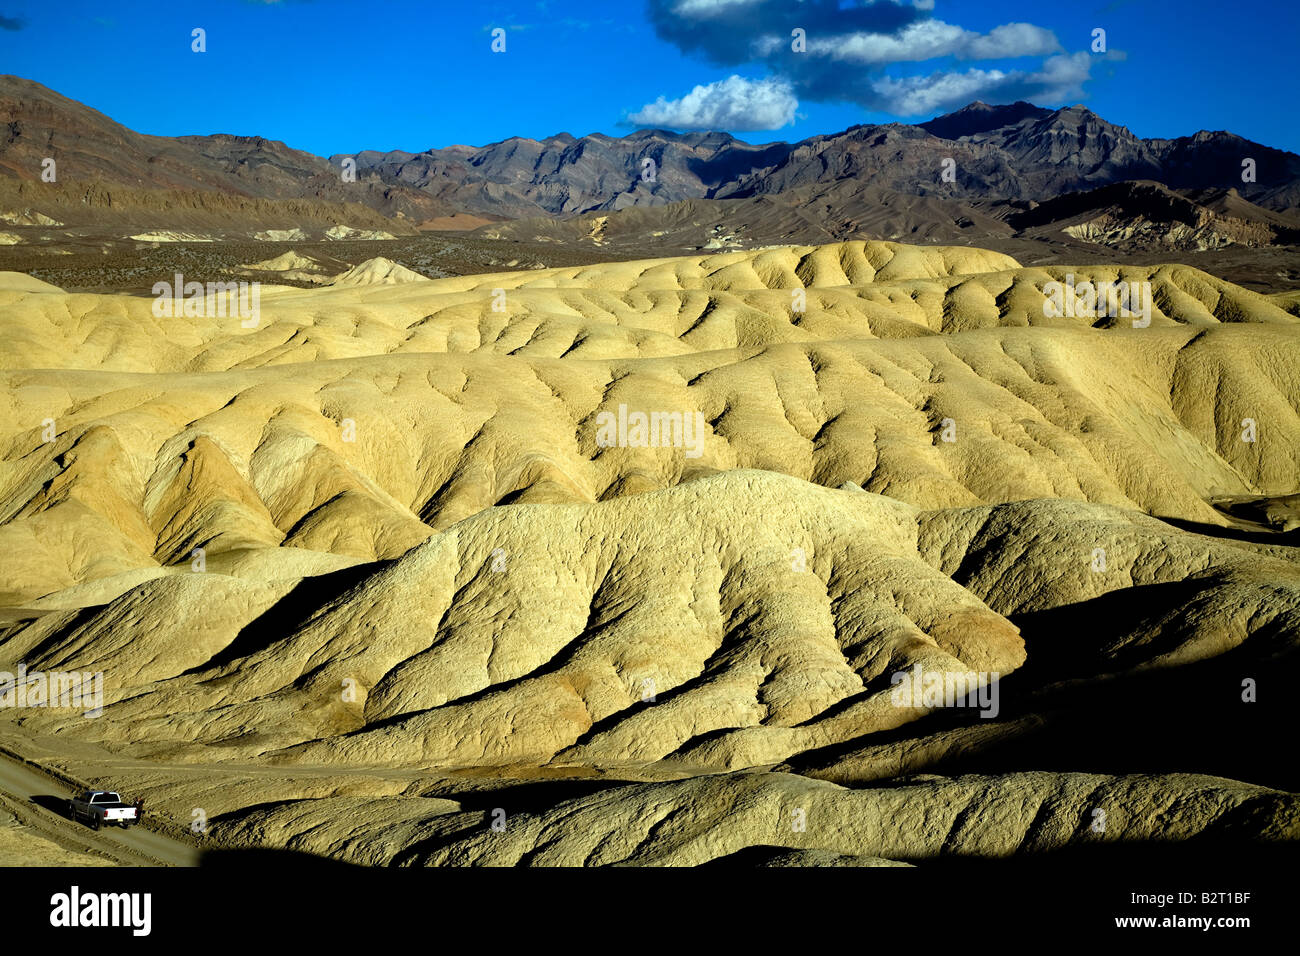 20 Team Mule Canyon drive in mudhills Death Valley in California, Stati Uniti d'America Foto Stock